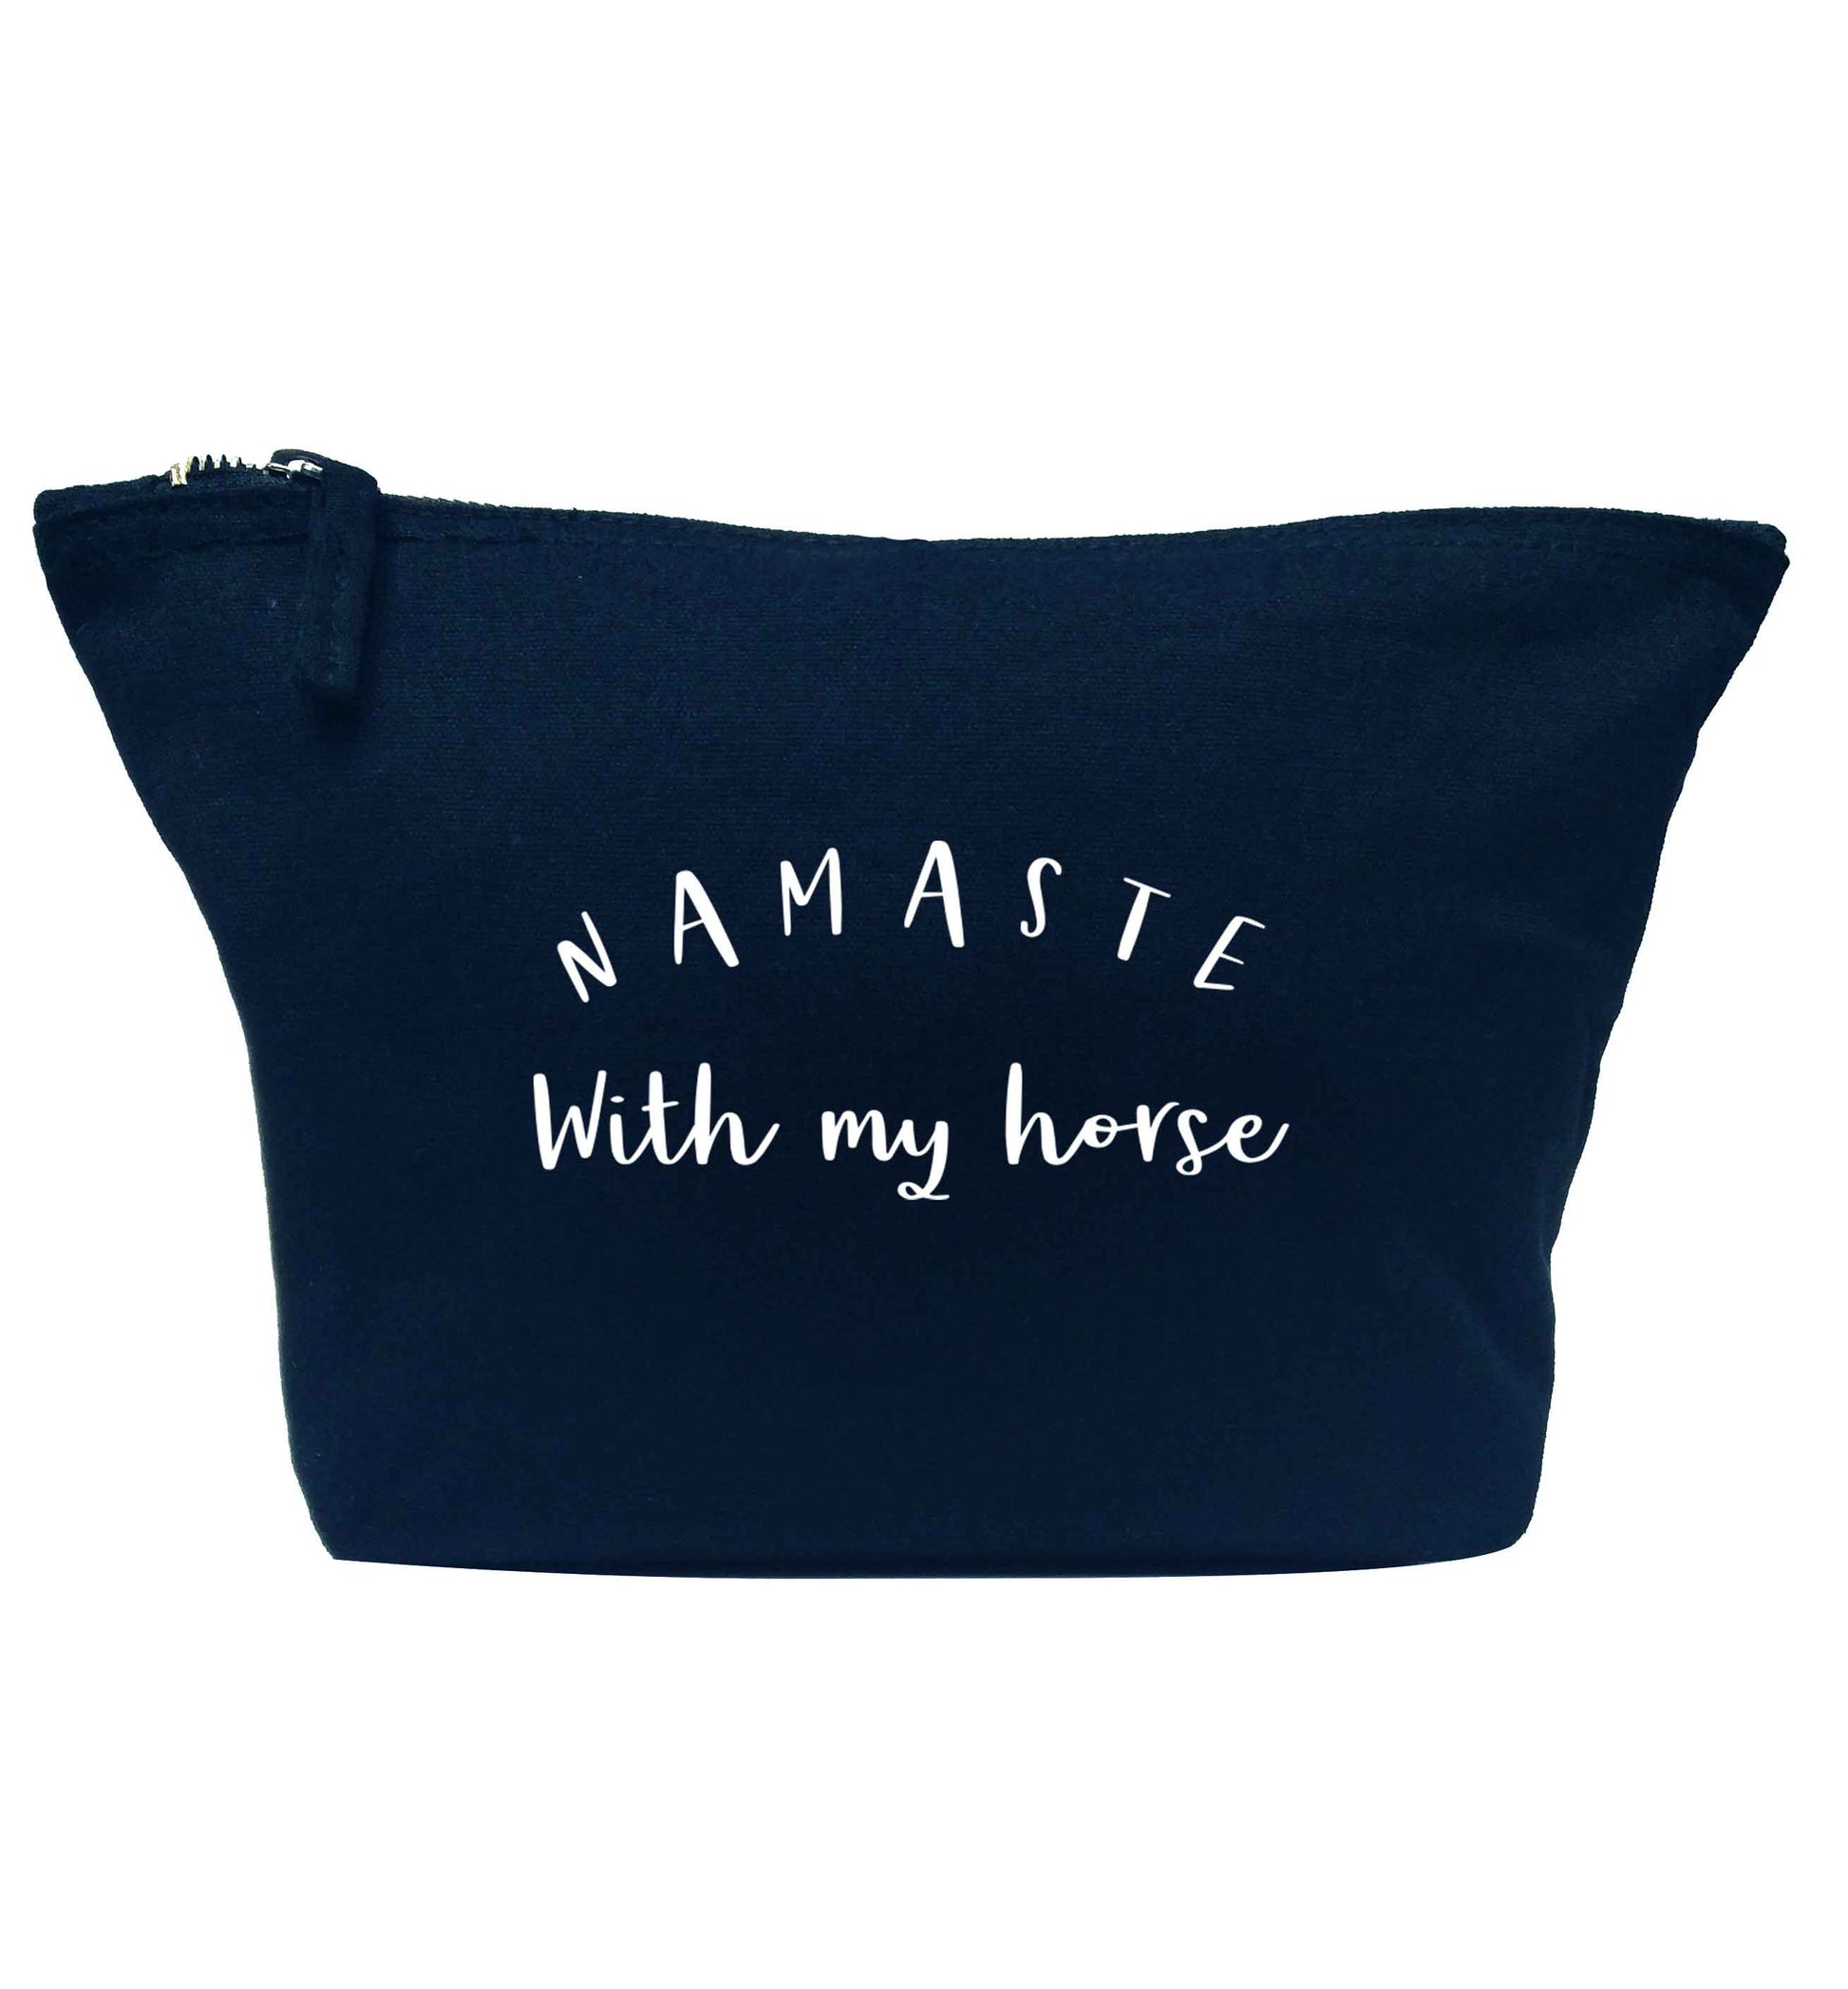 Namaste with my horse navy makeup bag